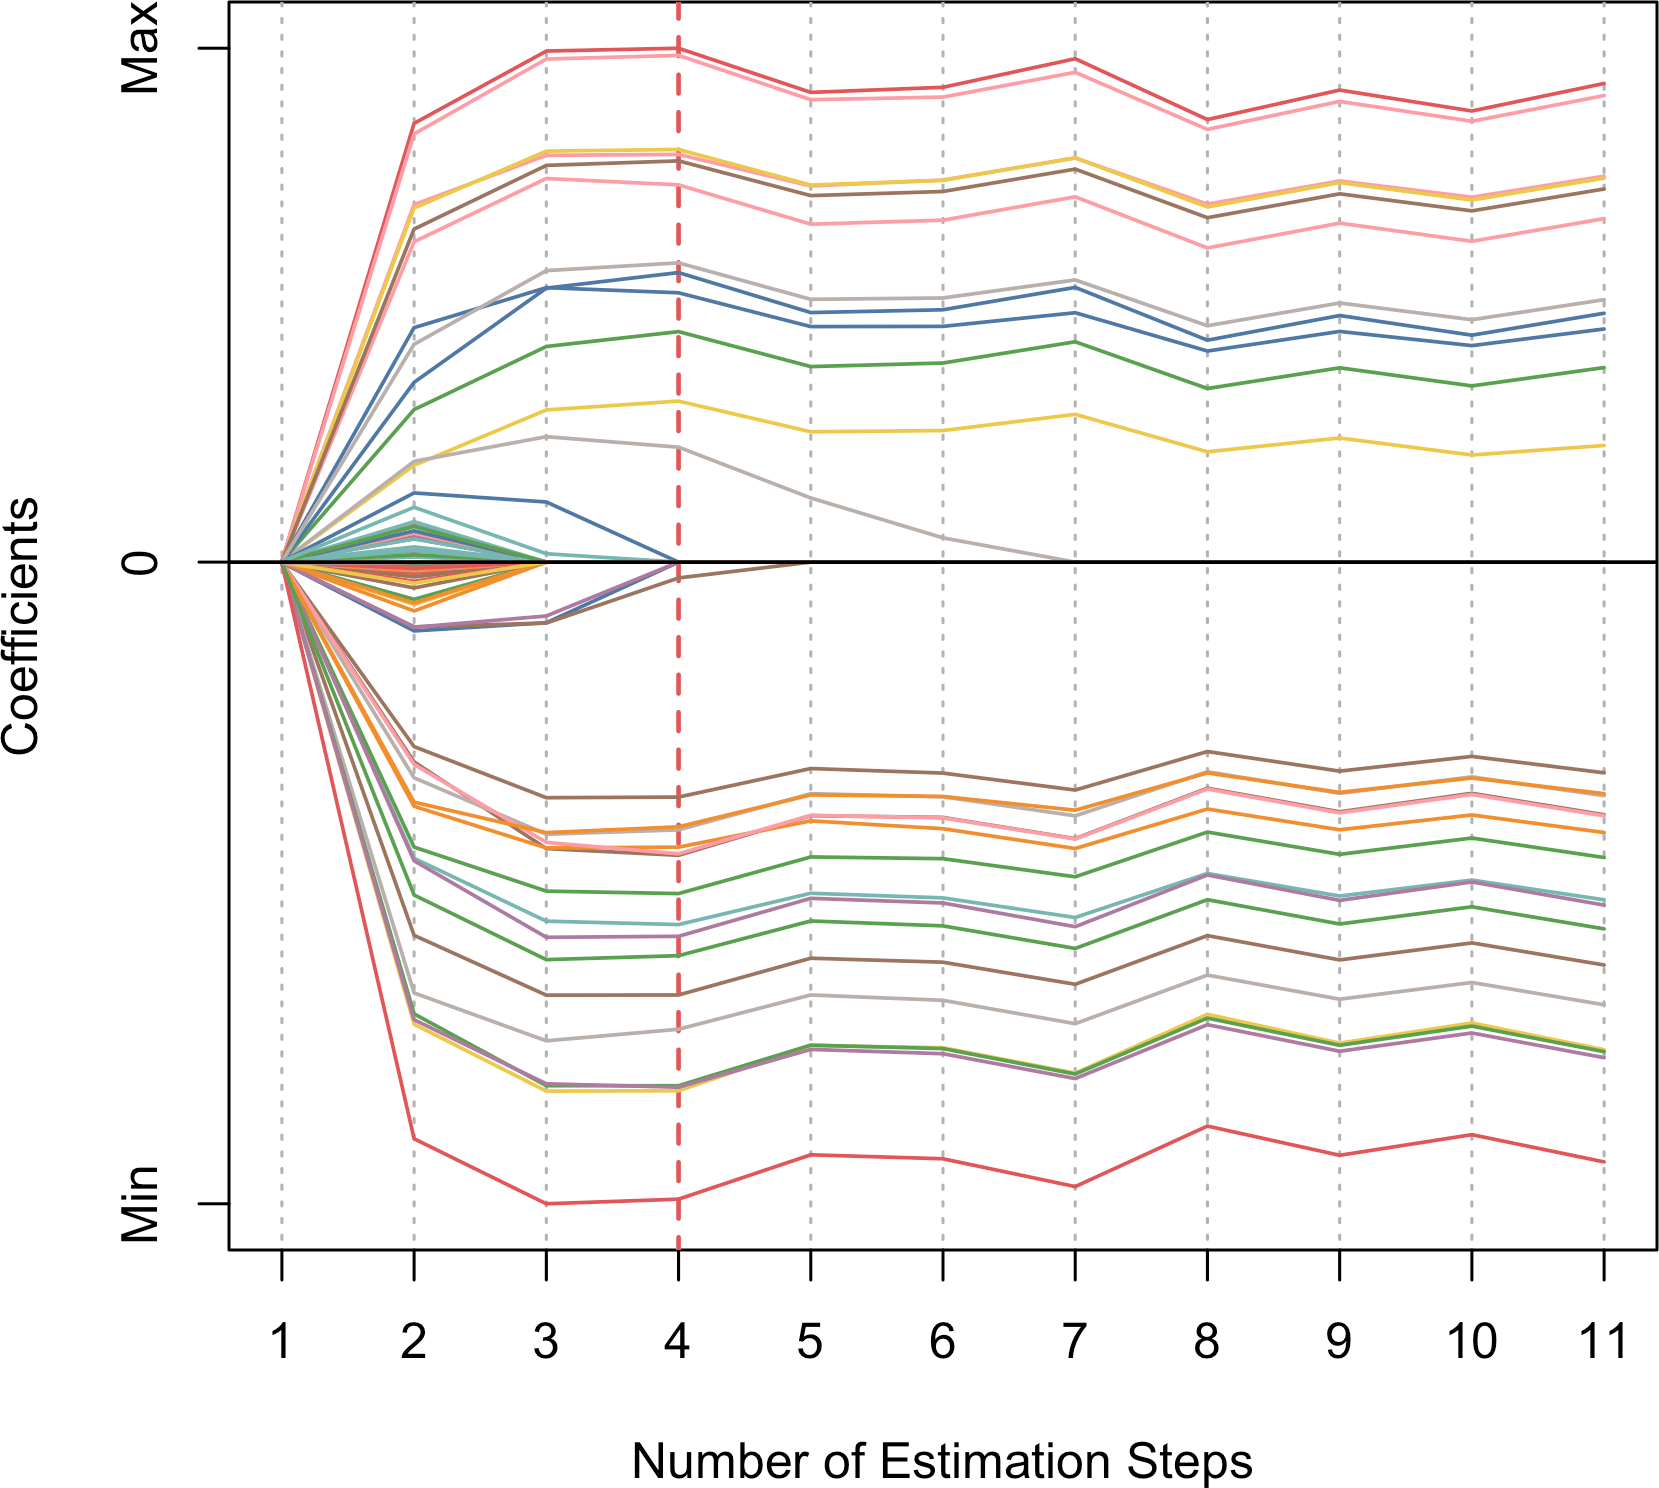 Coefficient profile plot showing coefficient changes through adaptive estimation steps.